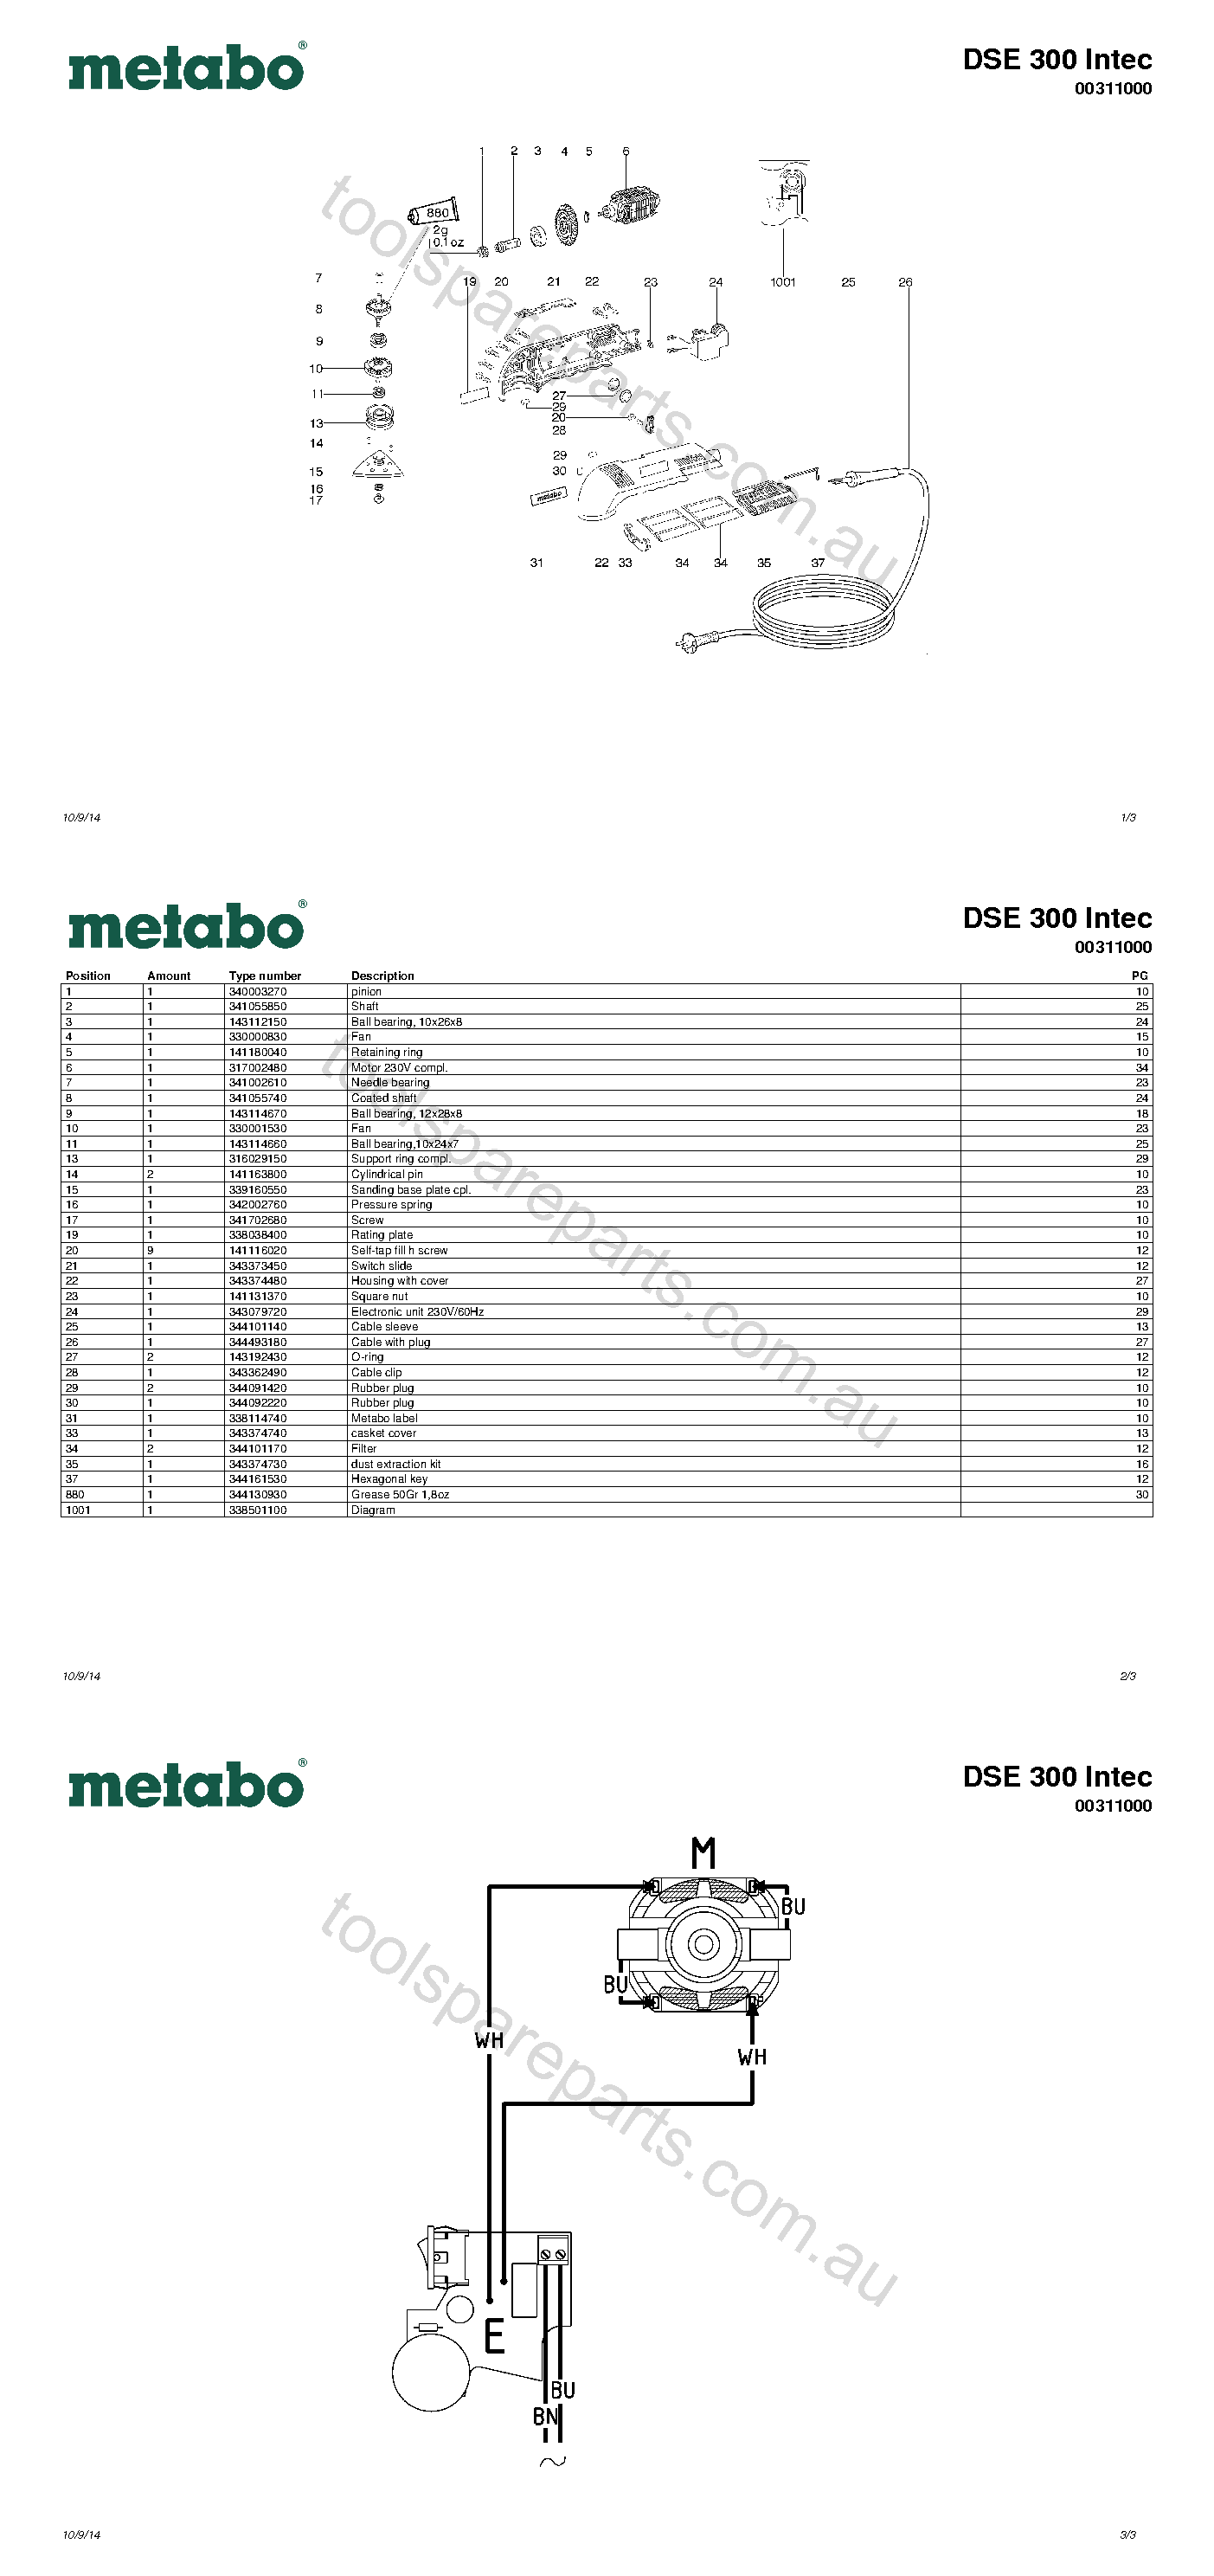 Metabo DSE 300 Intec 00311000  Diagram 1